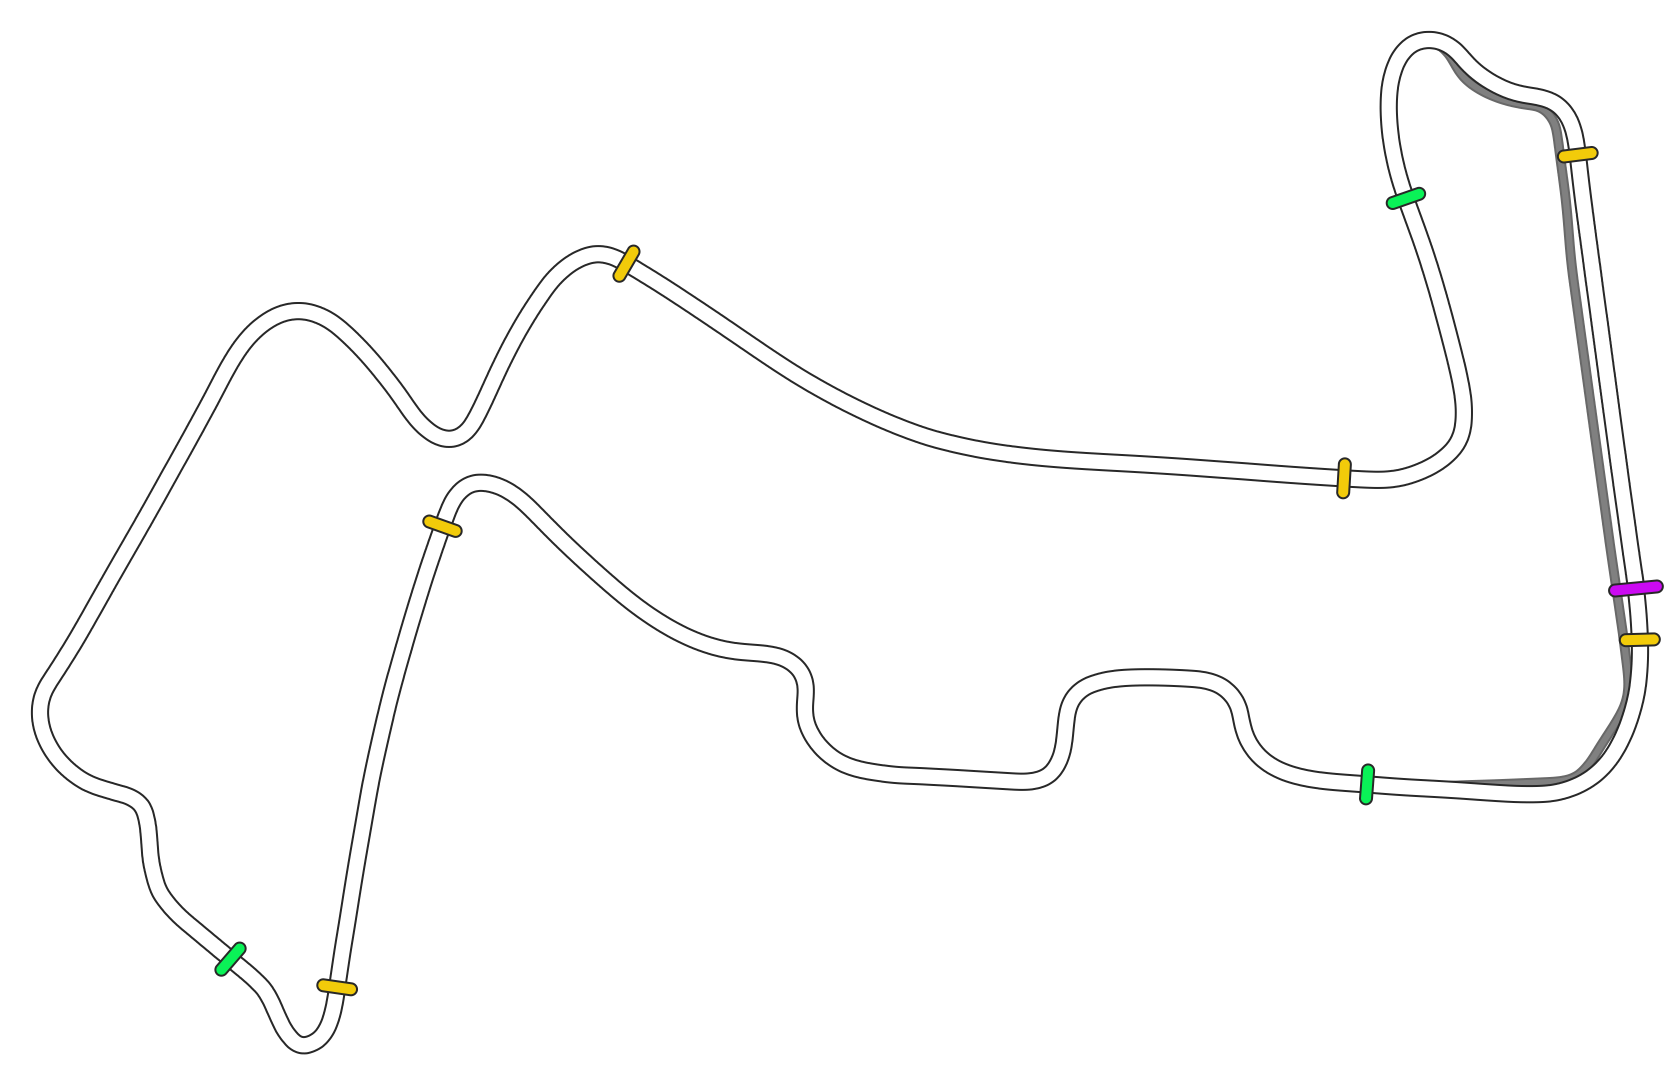 Singapore Grand Prix 2020